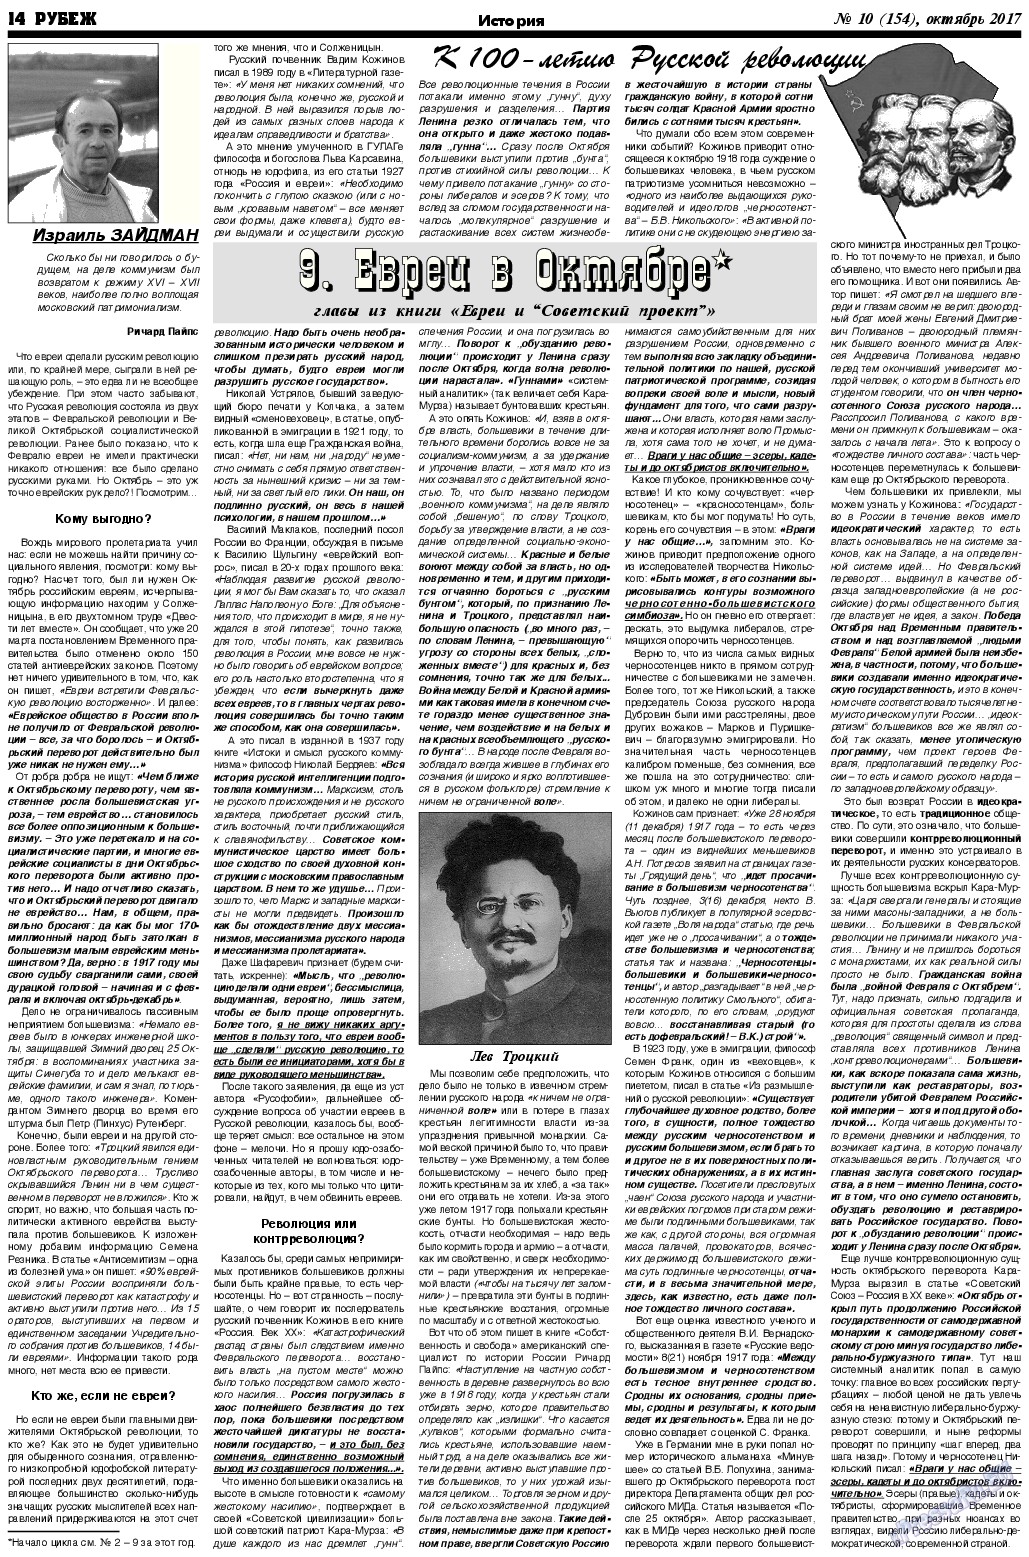 Рубеж, газета. 2017 №10 стр.14